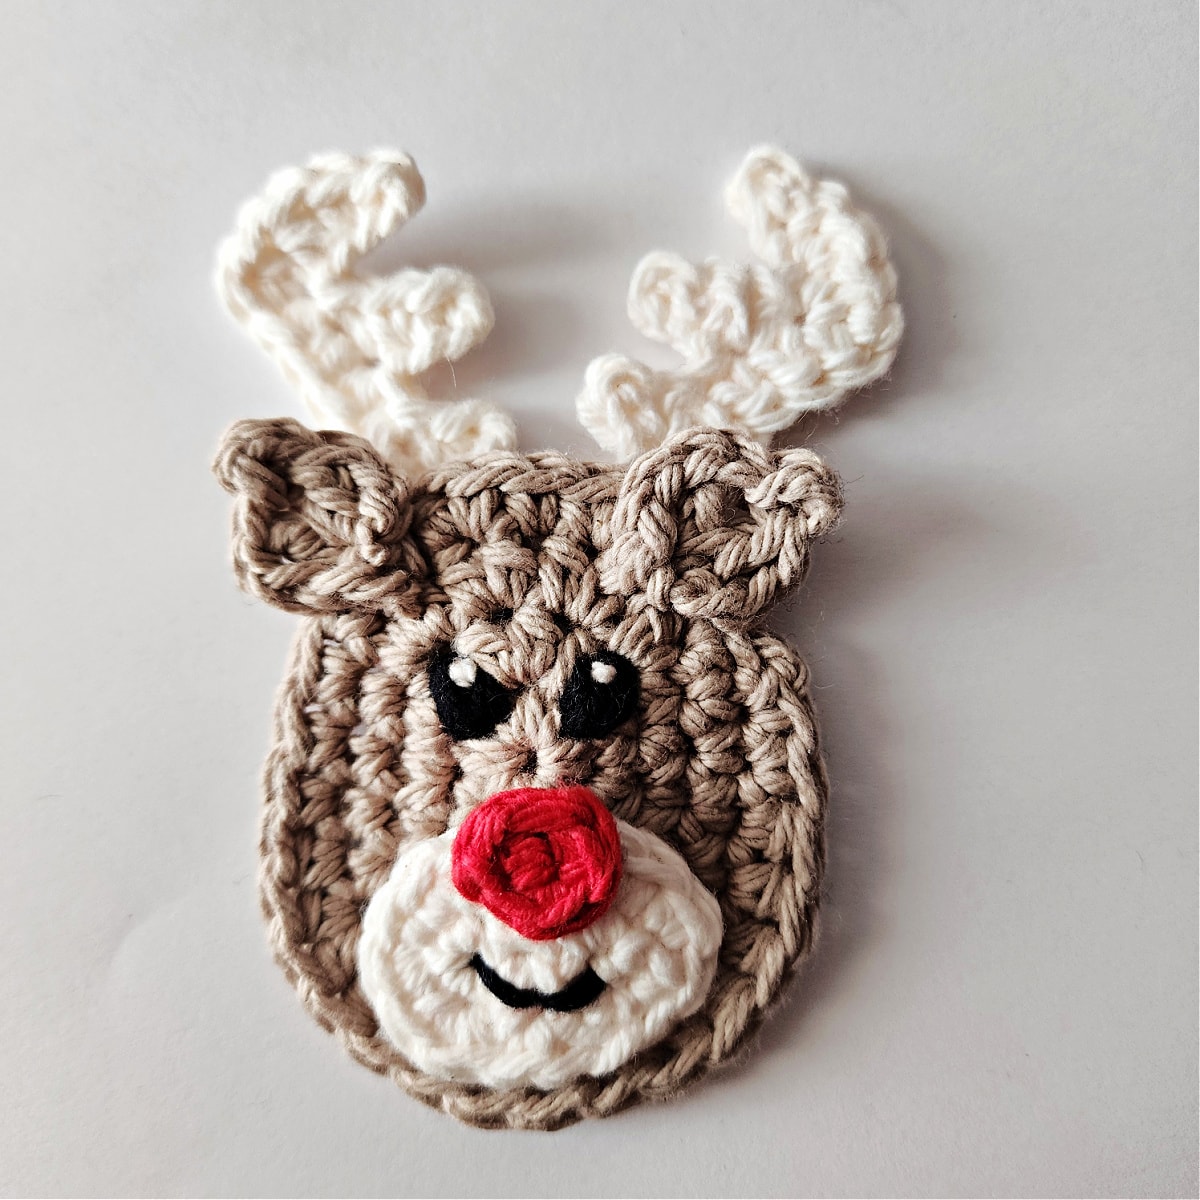 completed reindeer crochet face details